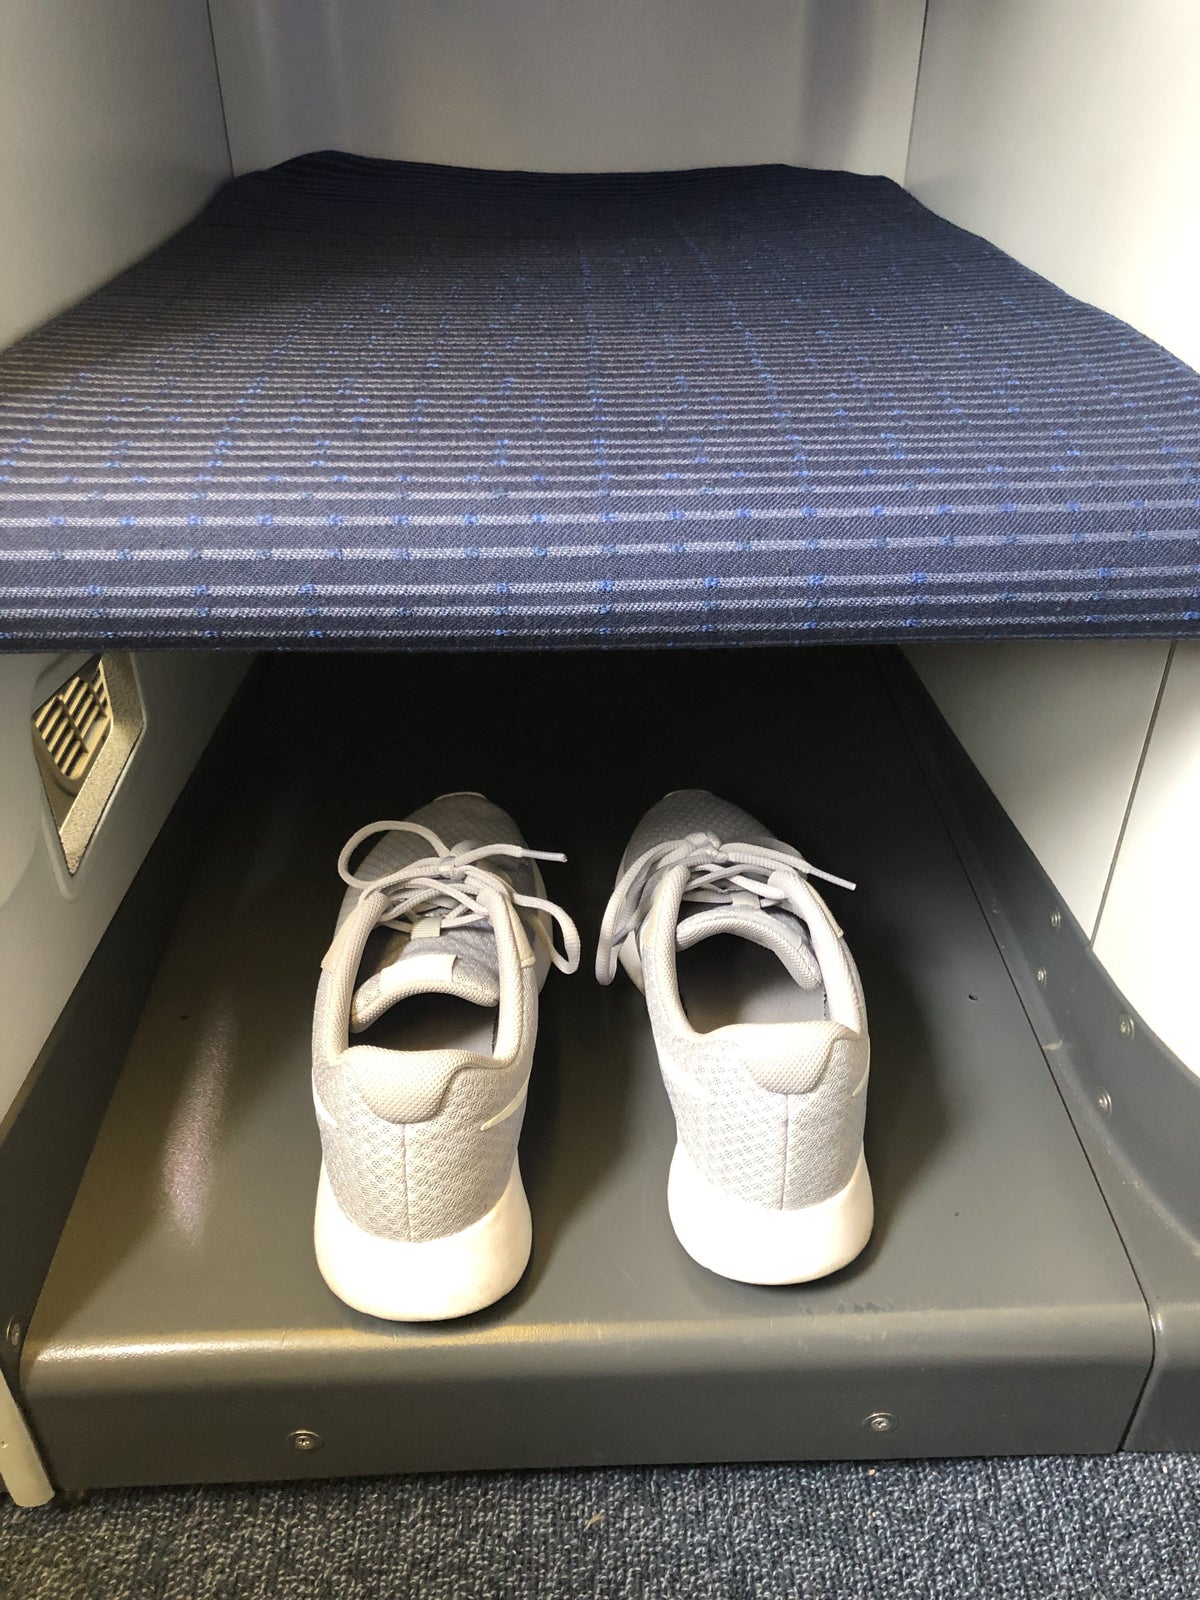 ANA Business Class Seat Shoe Storage